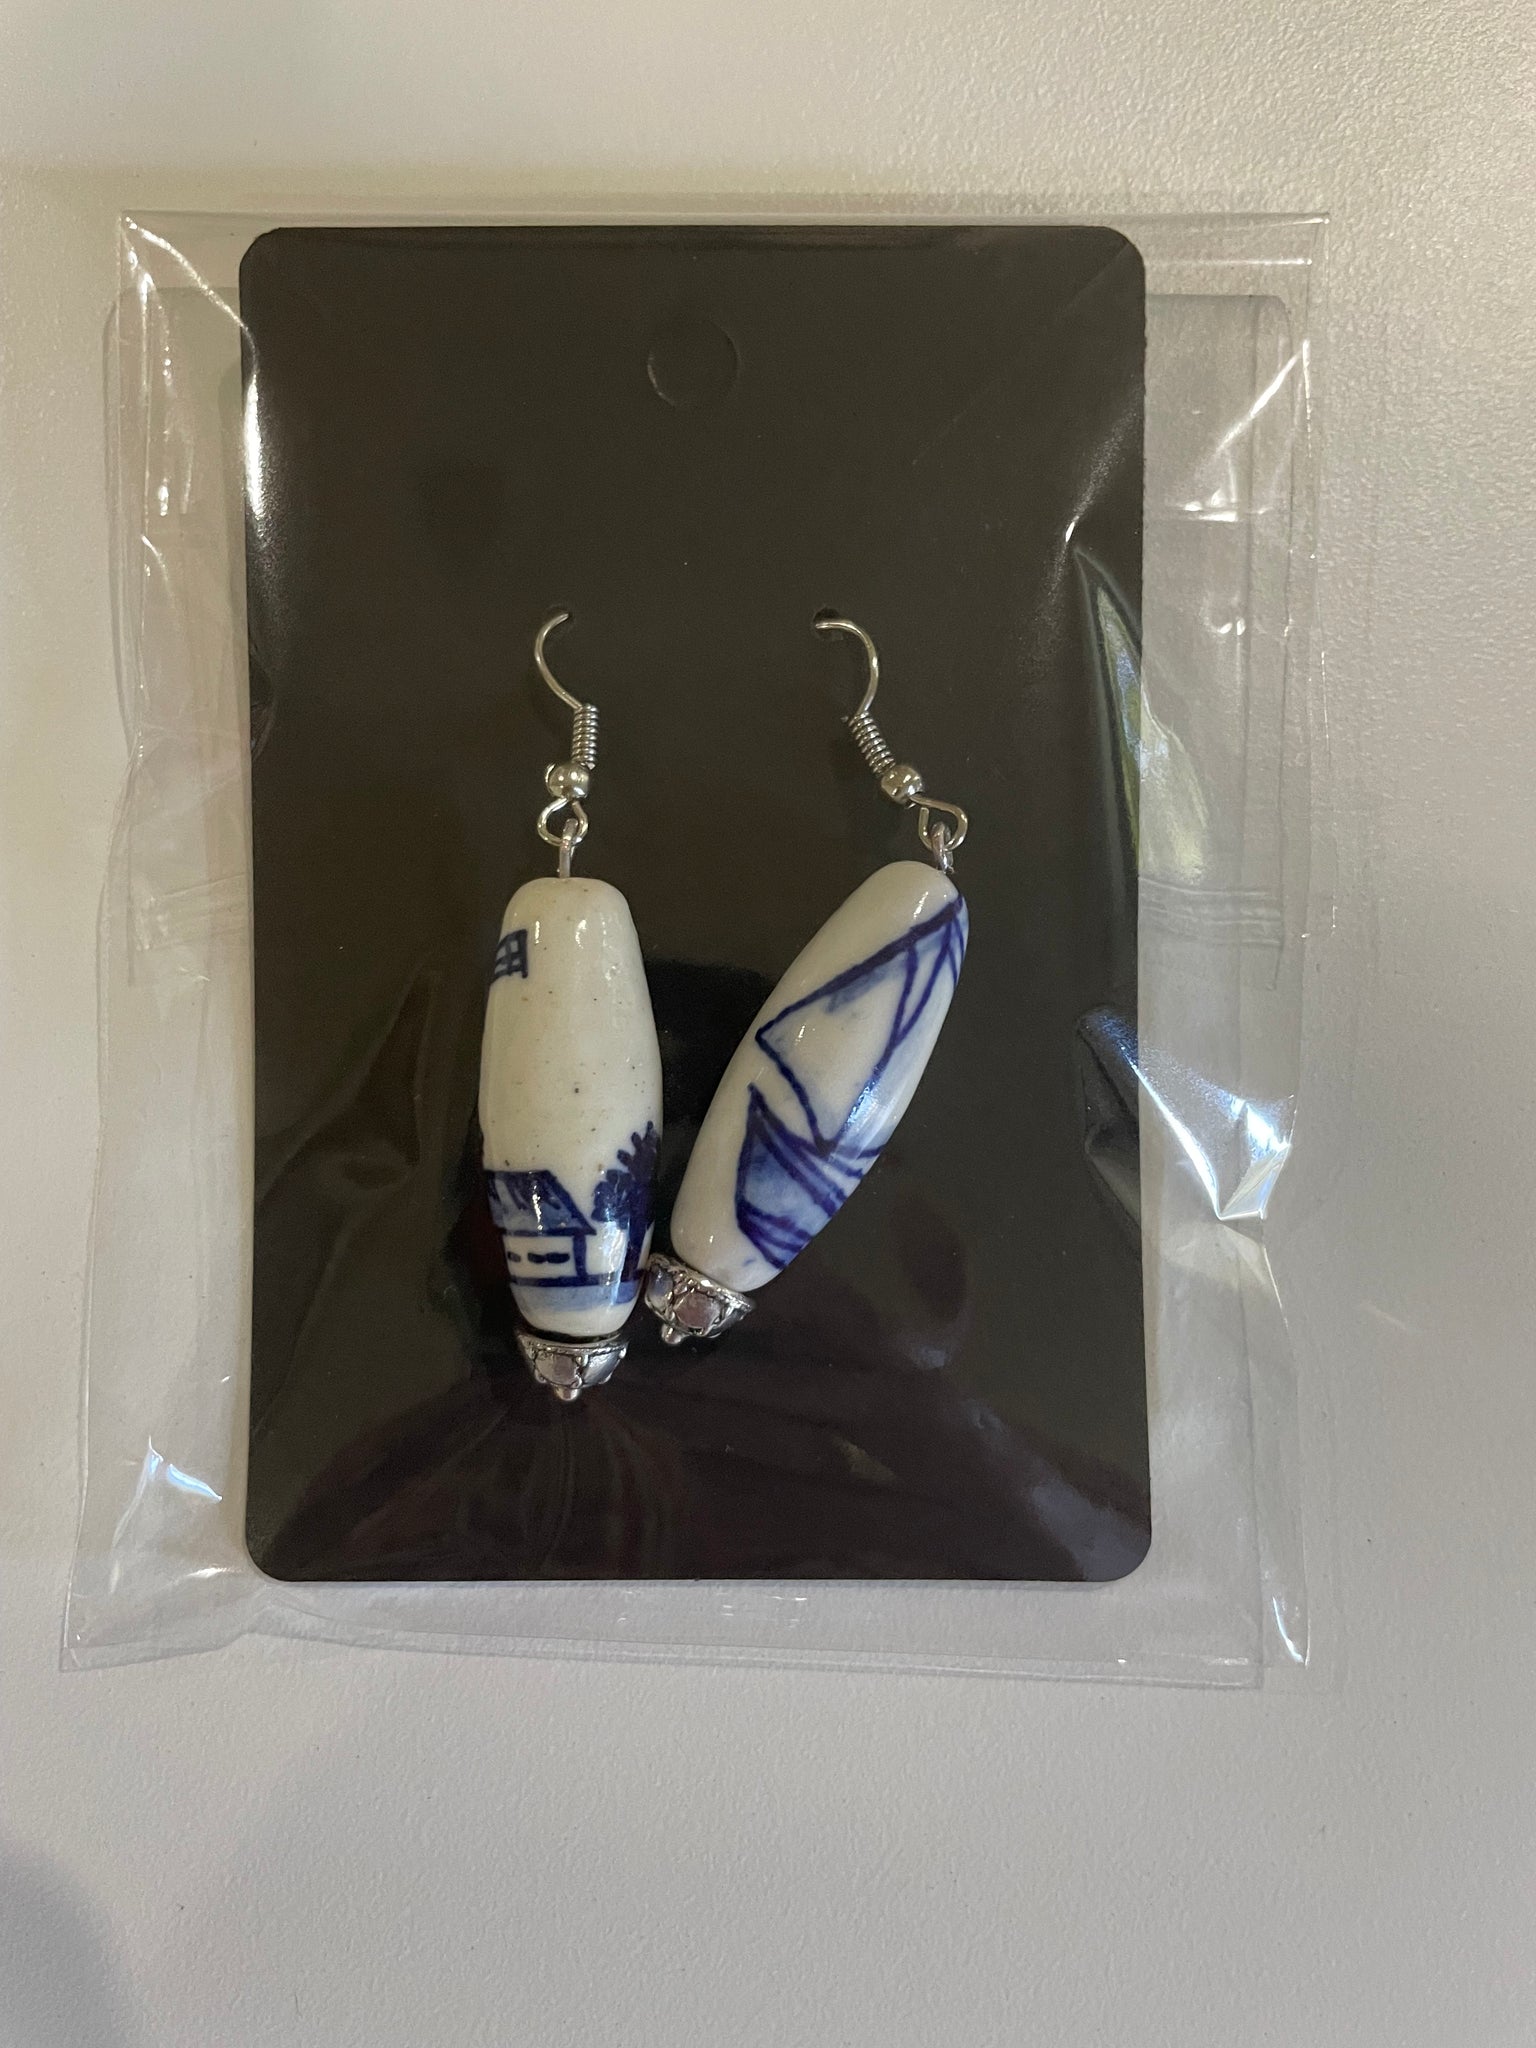 Delft blue ceramic earrings ship/windmill